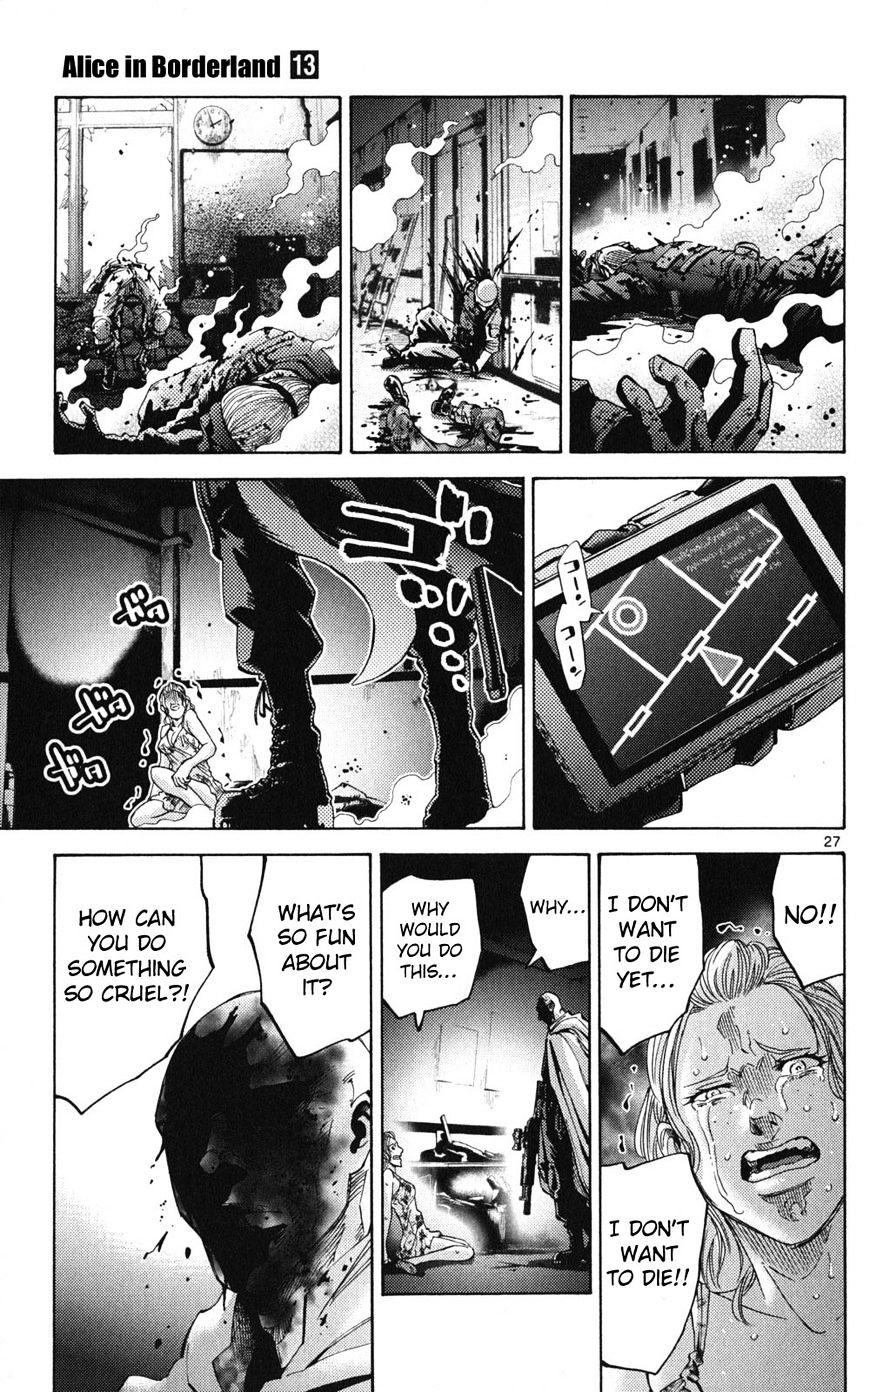 Imawa No Kuni No Alice Chapter 49.1 : Side Story 5 - King Of Spades (1) page 25 - Mangakakalot